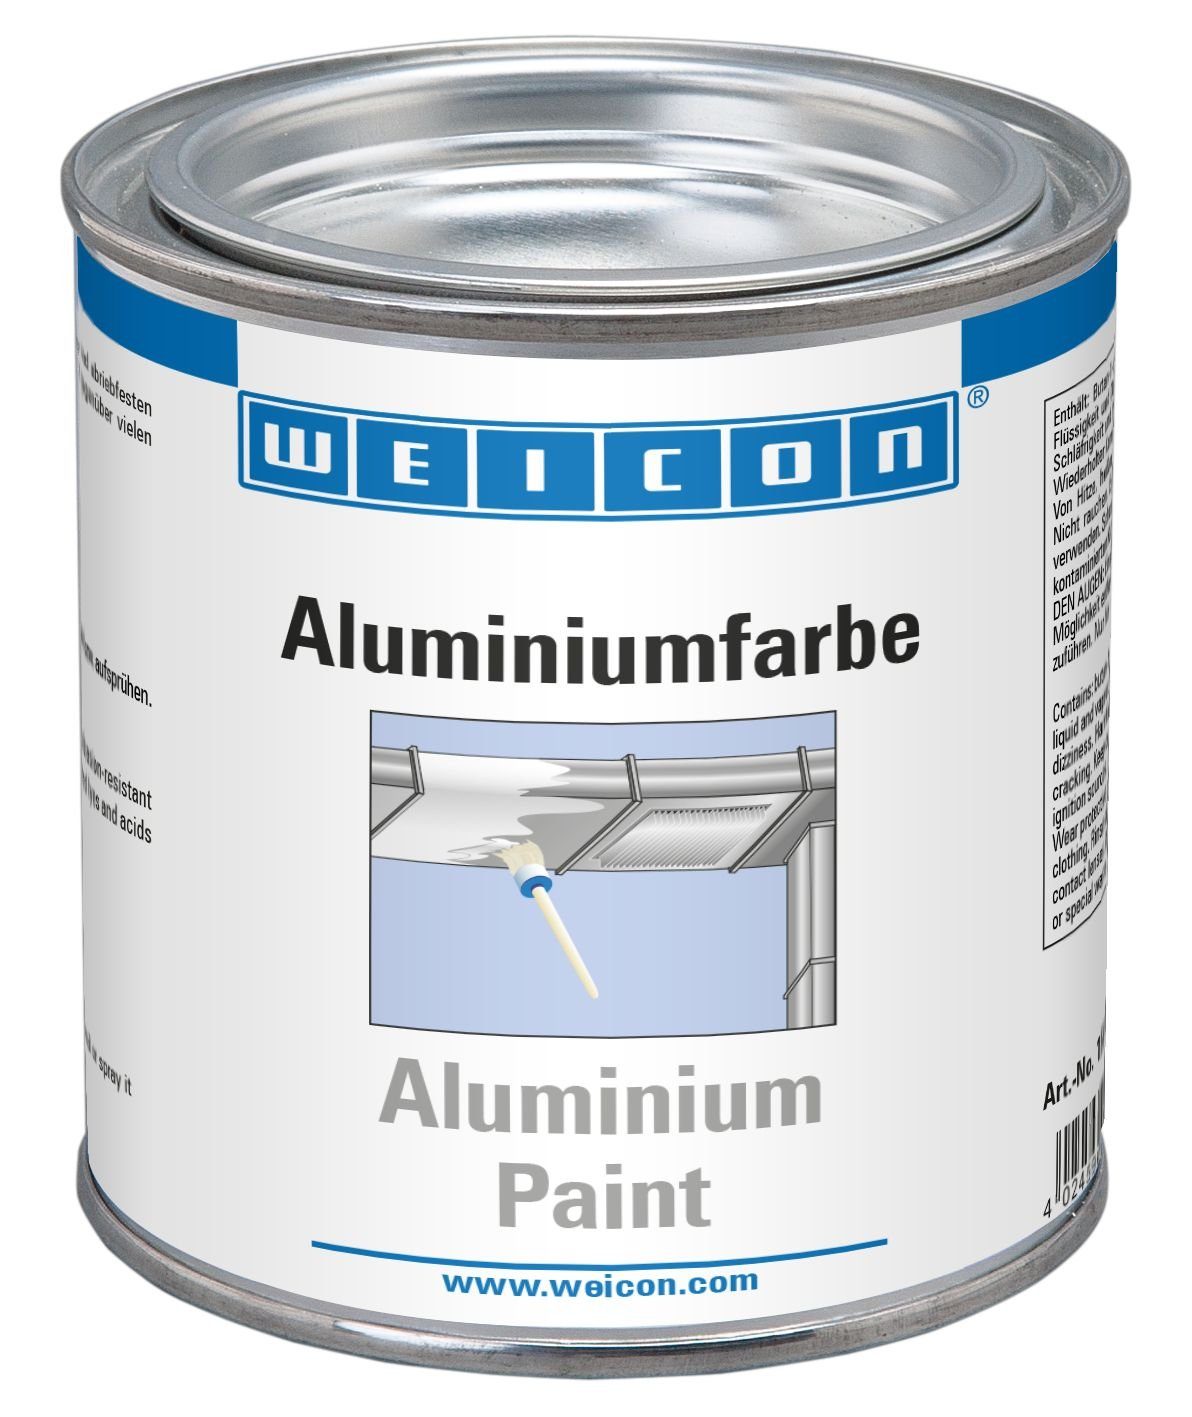 Korrosionsschutz Metallglanzfarbe WEICON aus Aluminiumpigmentbeschichtung Aluminiumfarbe,